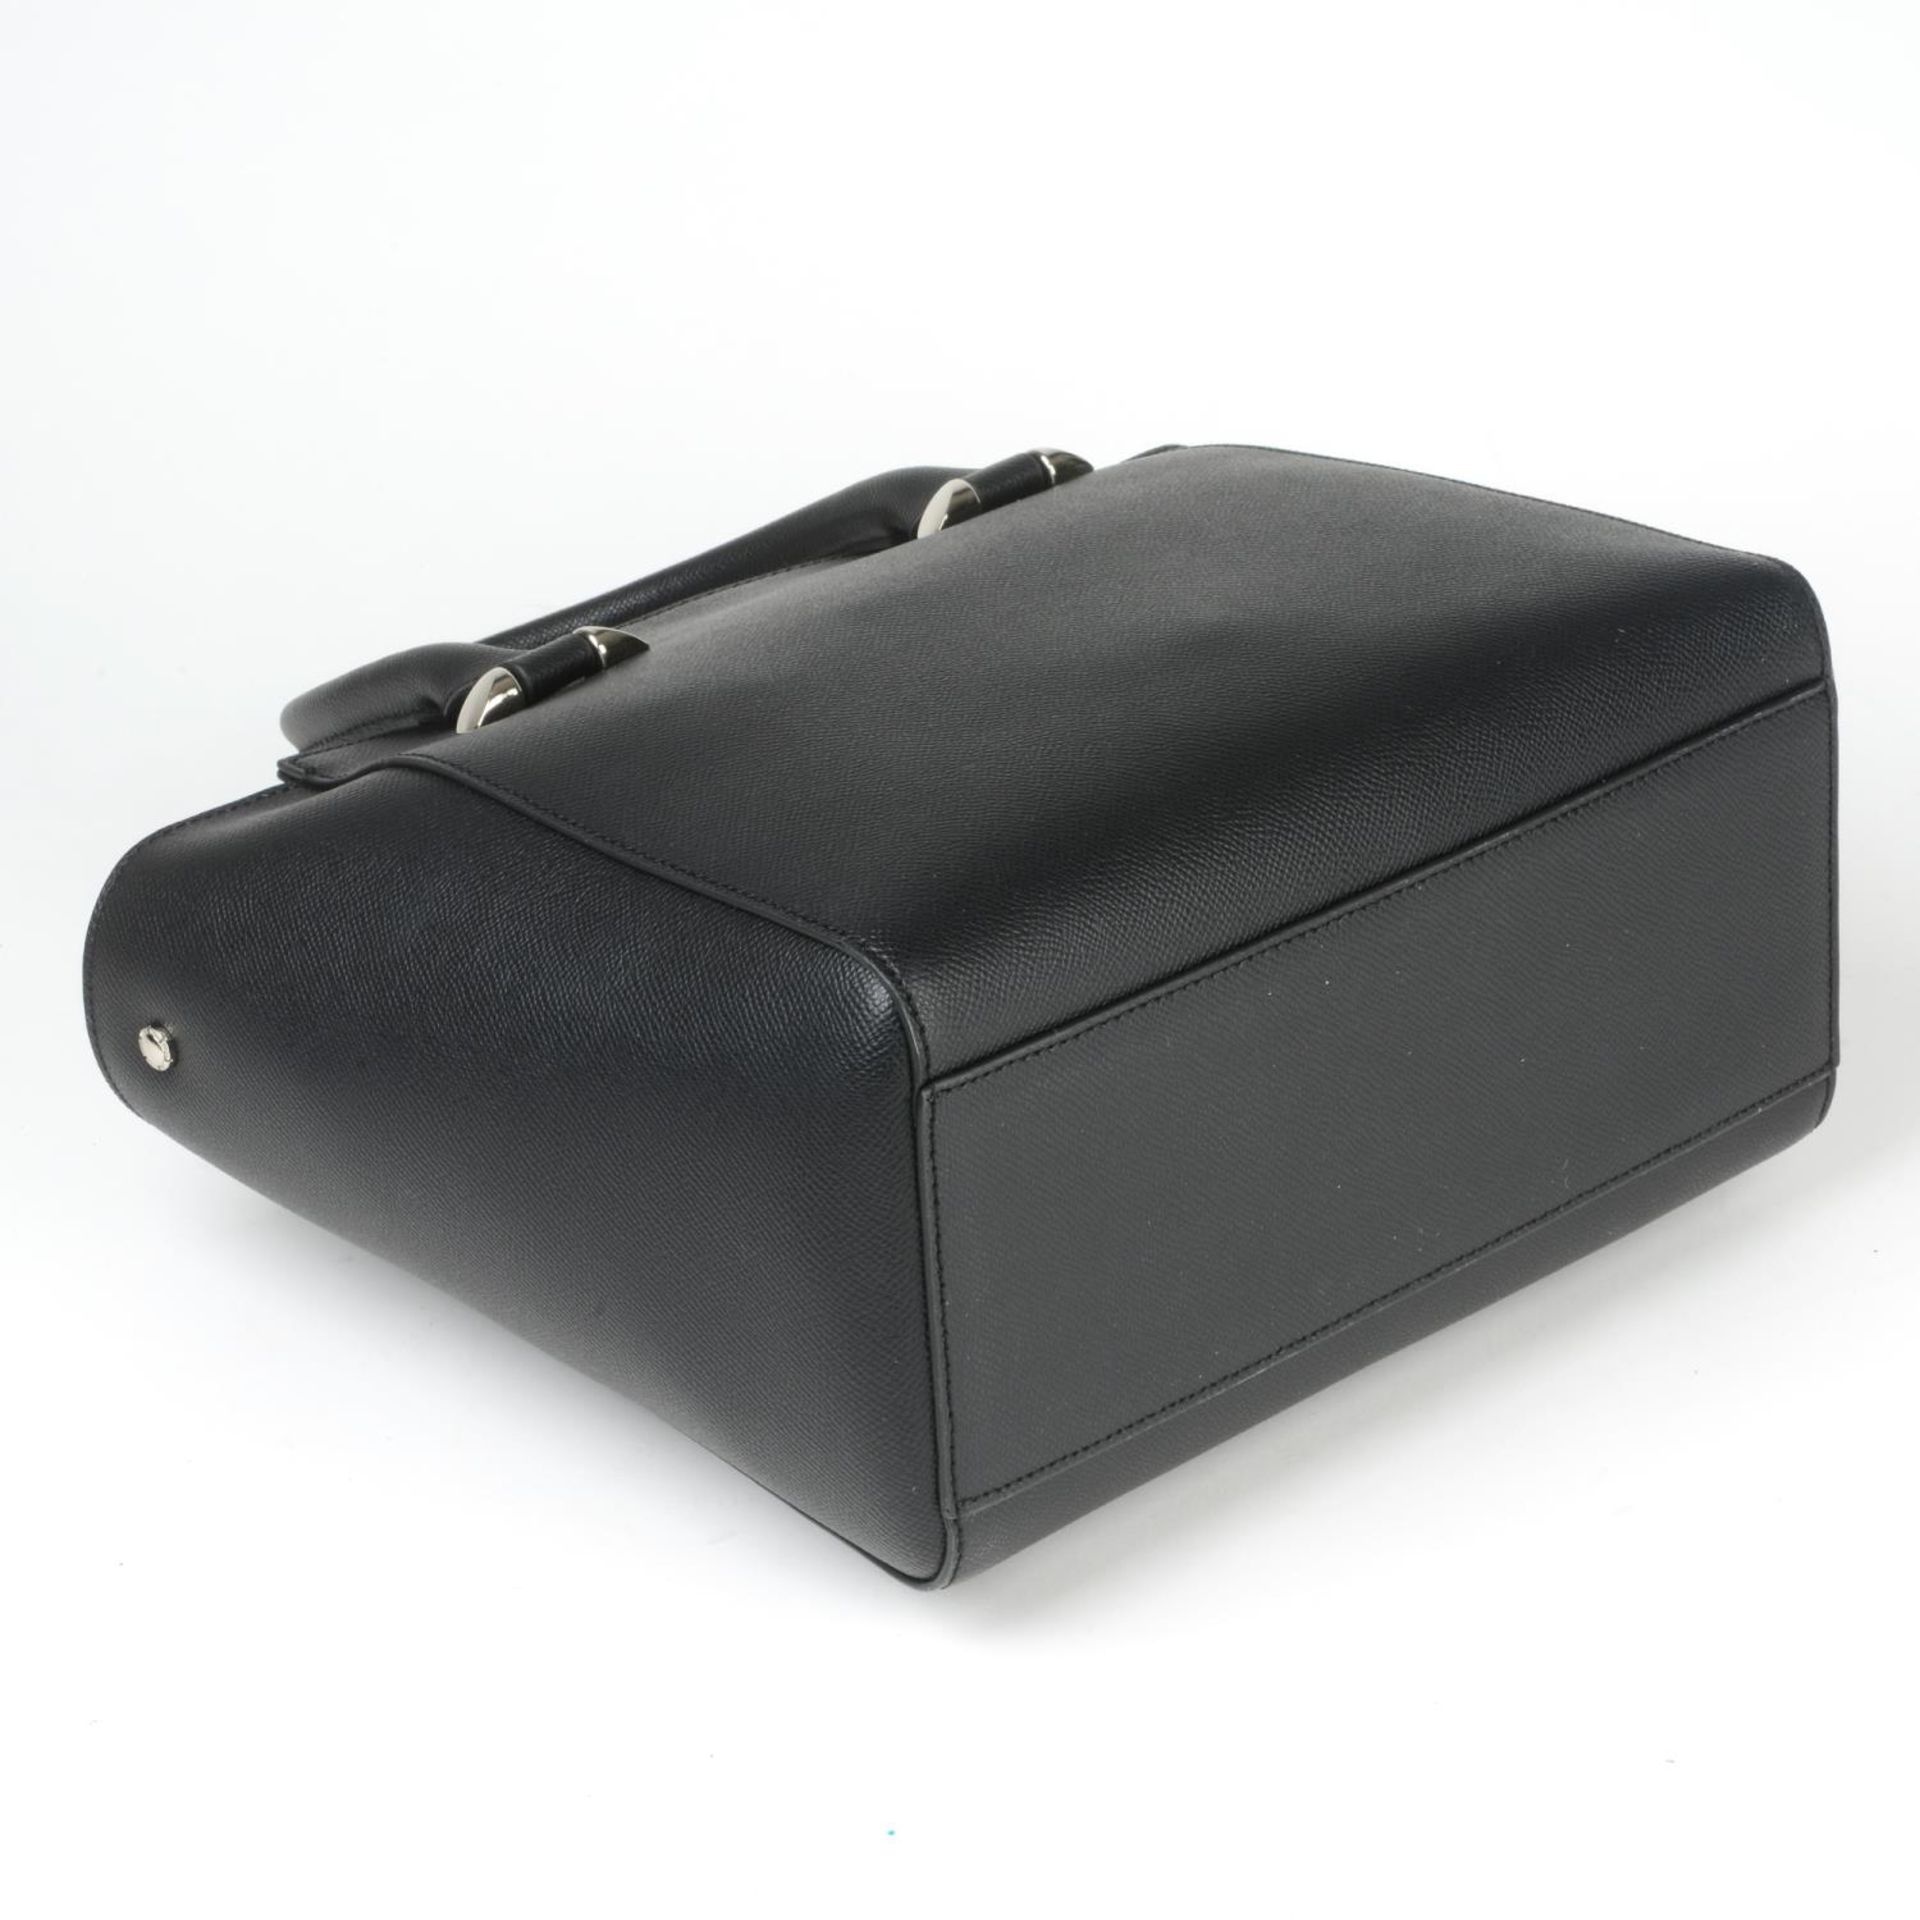 CAVALLO MODA - two leather handbags. - Bild 5 aus 5